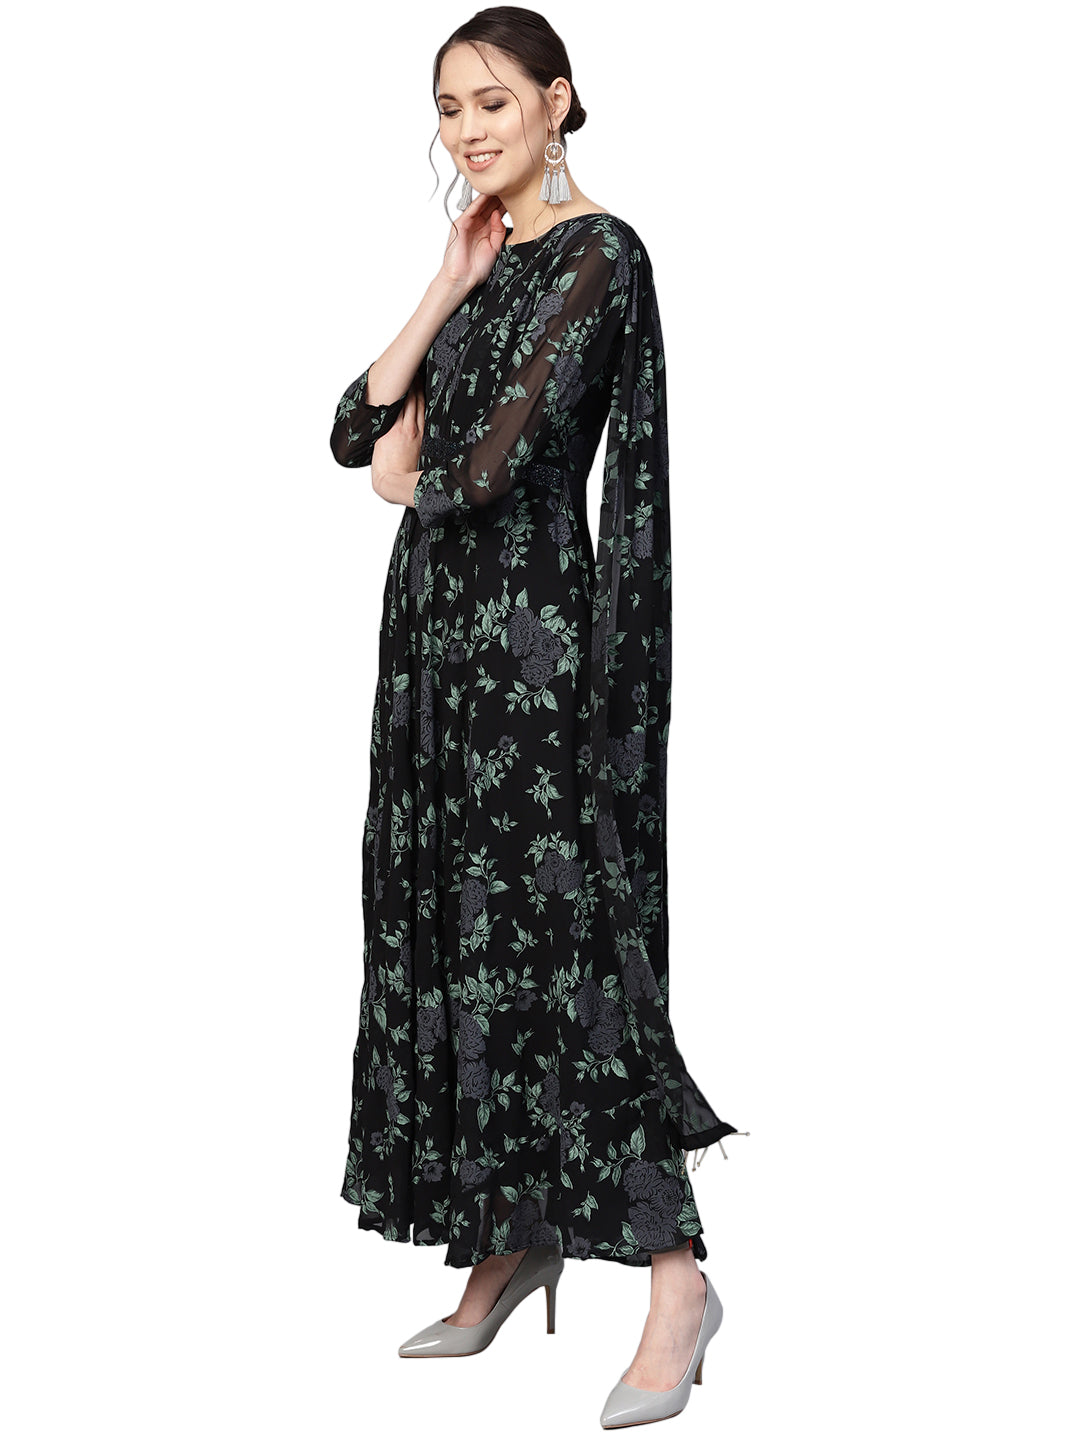 Black Floral Printed Flared Georgette Dress